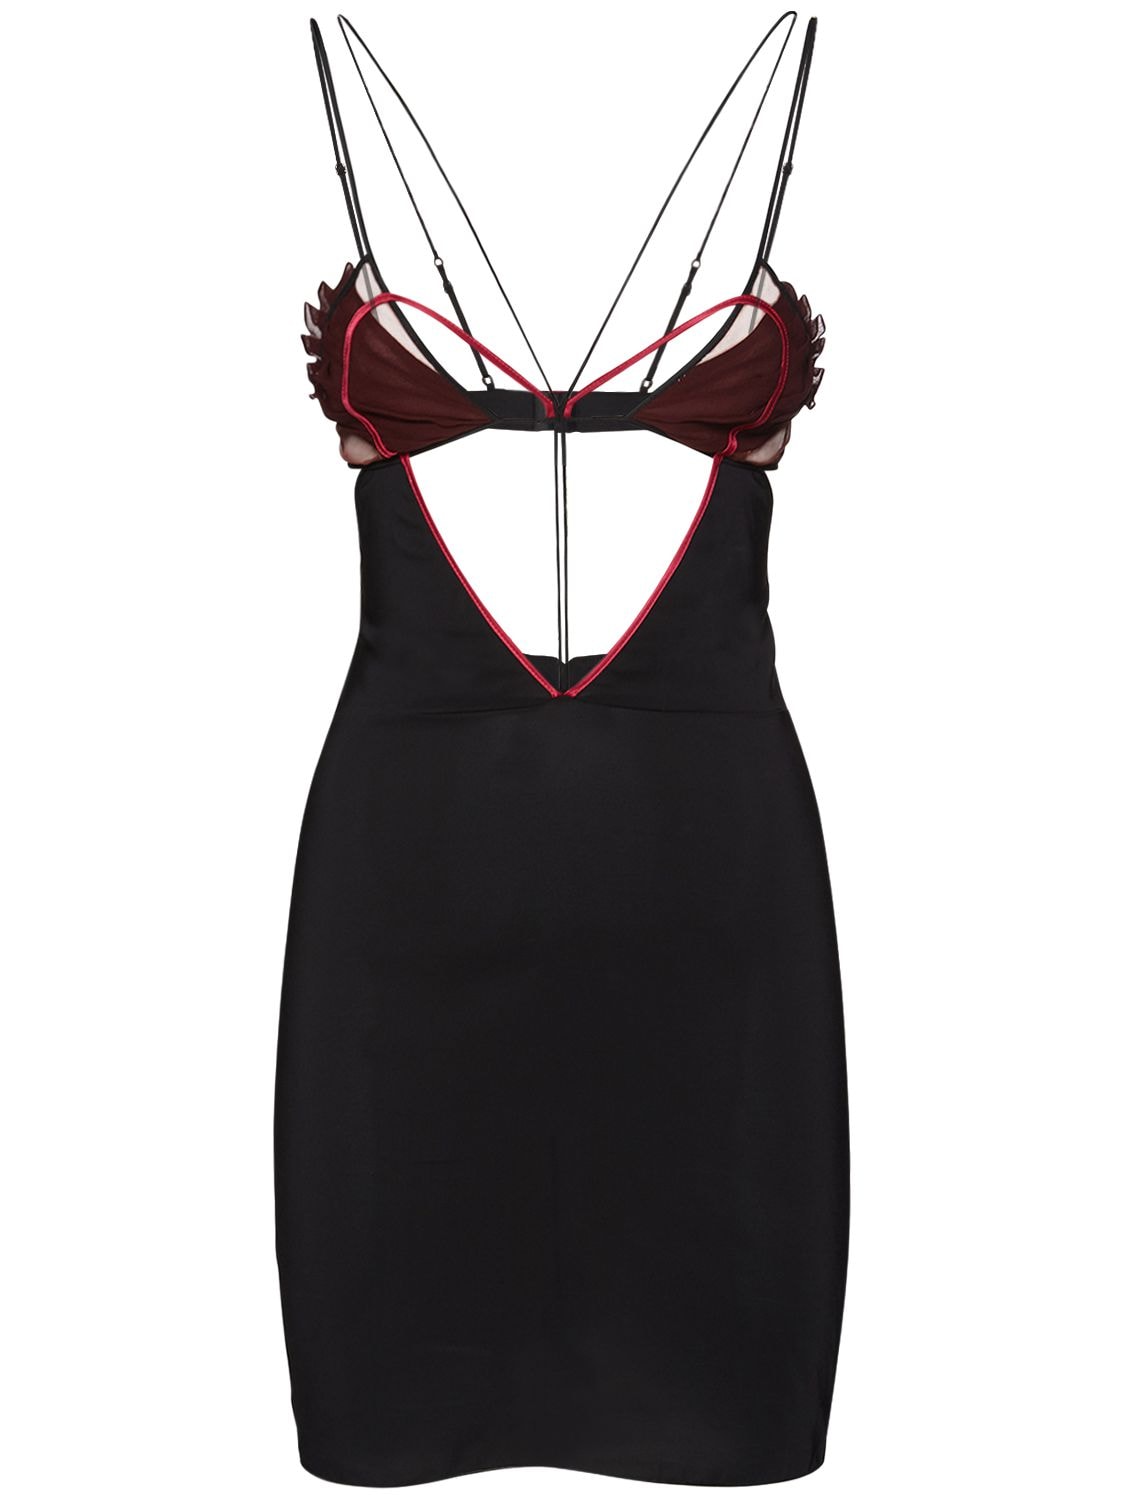 Nensi Dojaka - Heart bra fitted tulle crepe mini dress - Oxblood/Black